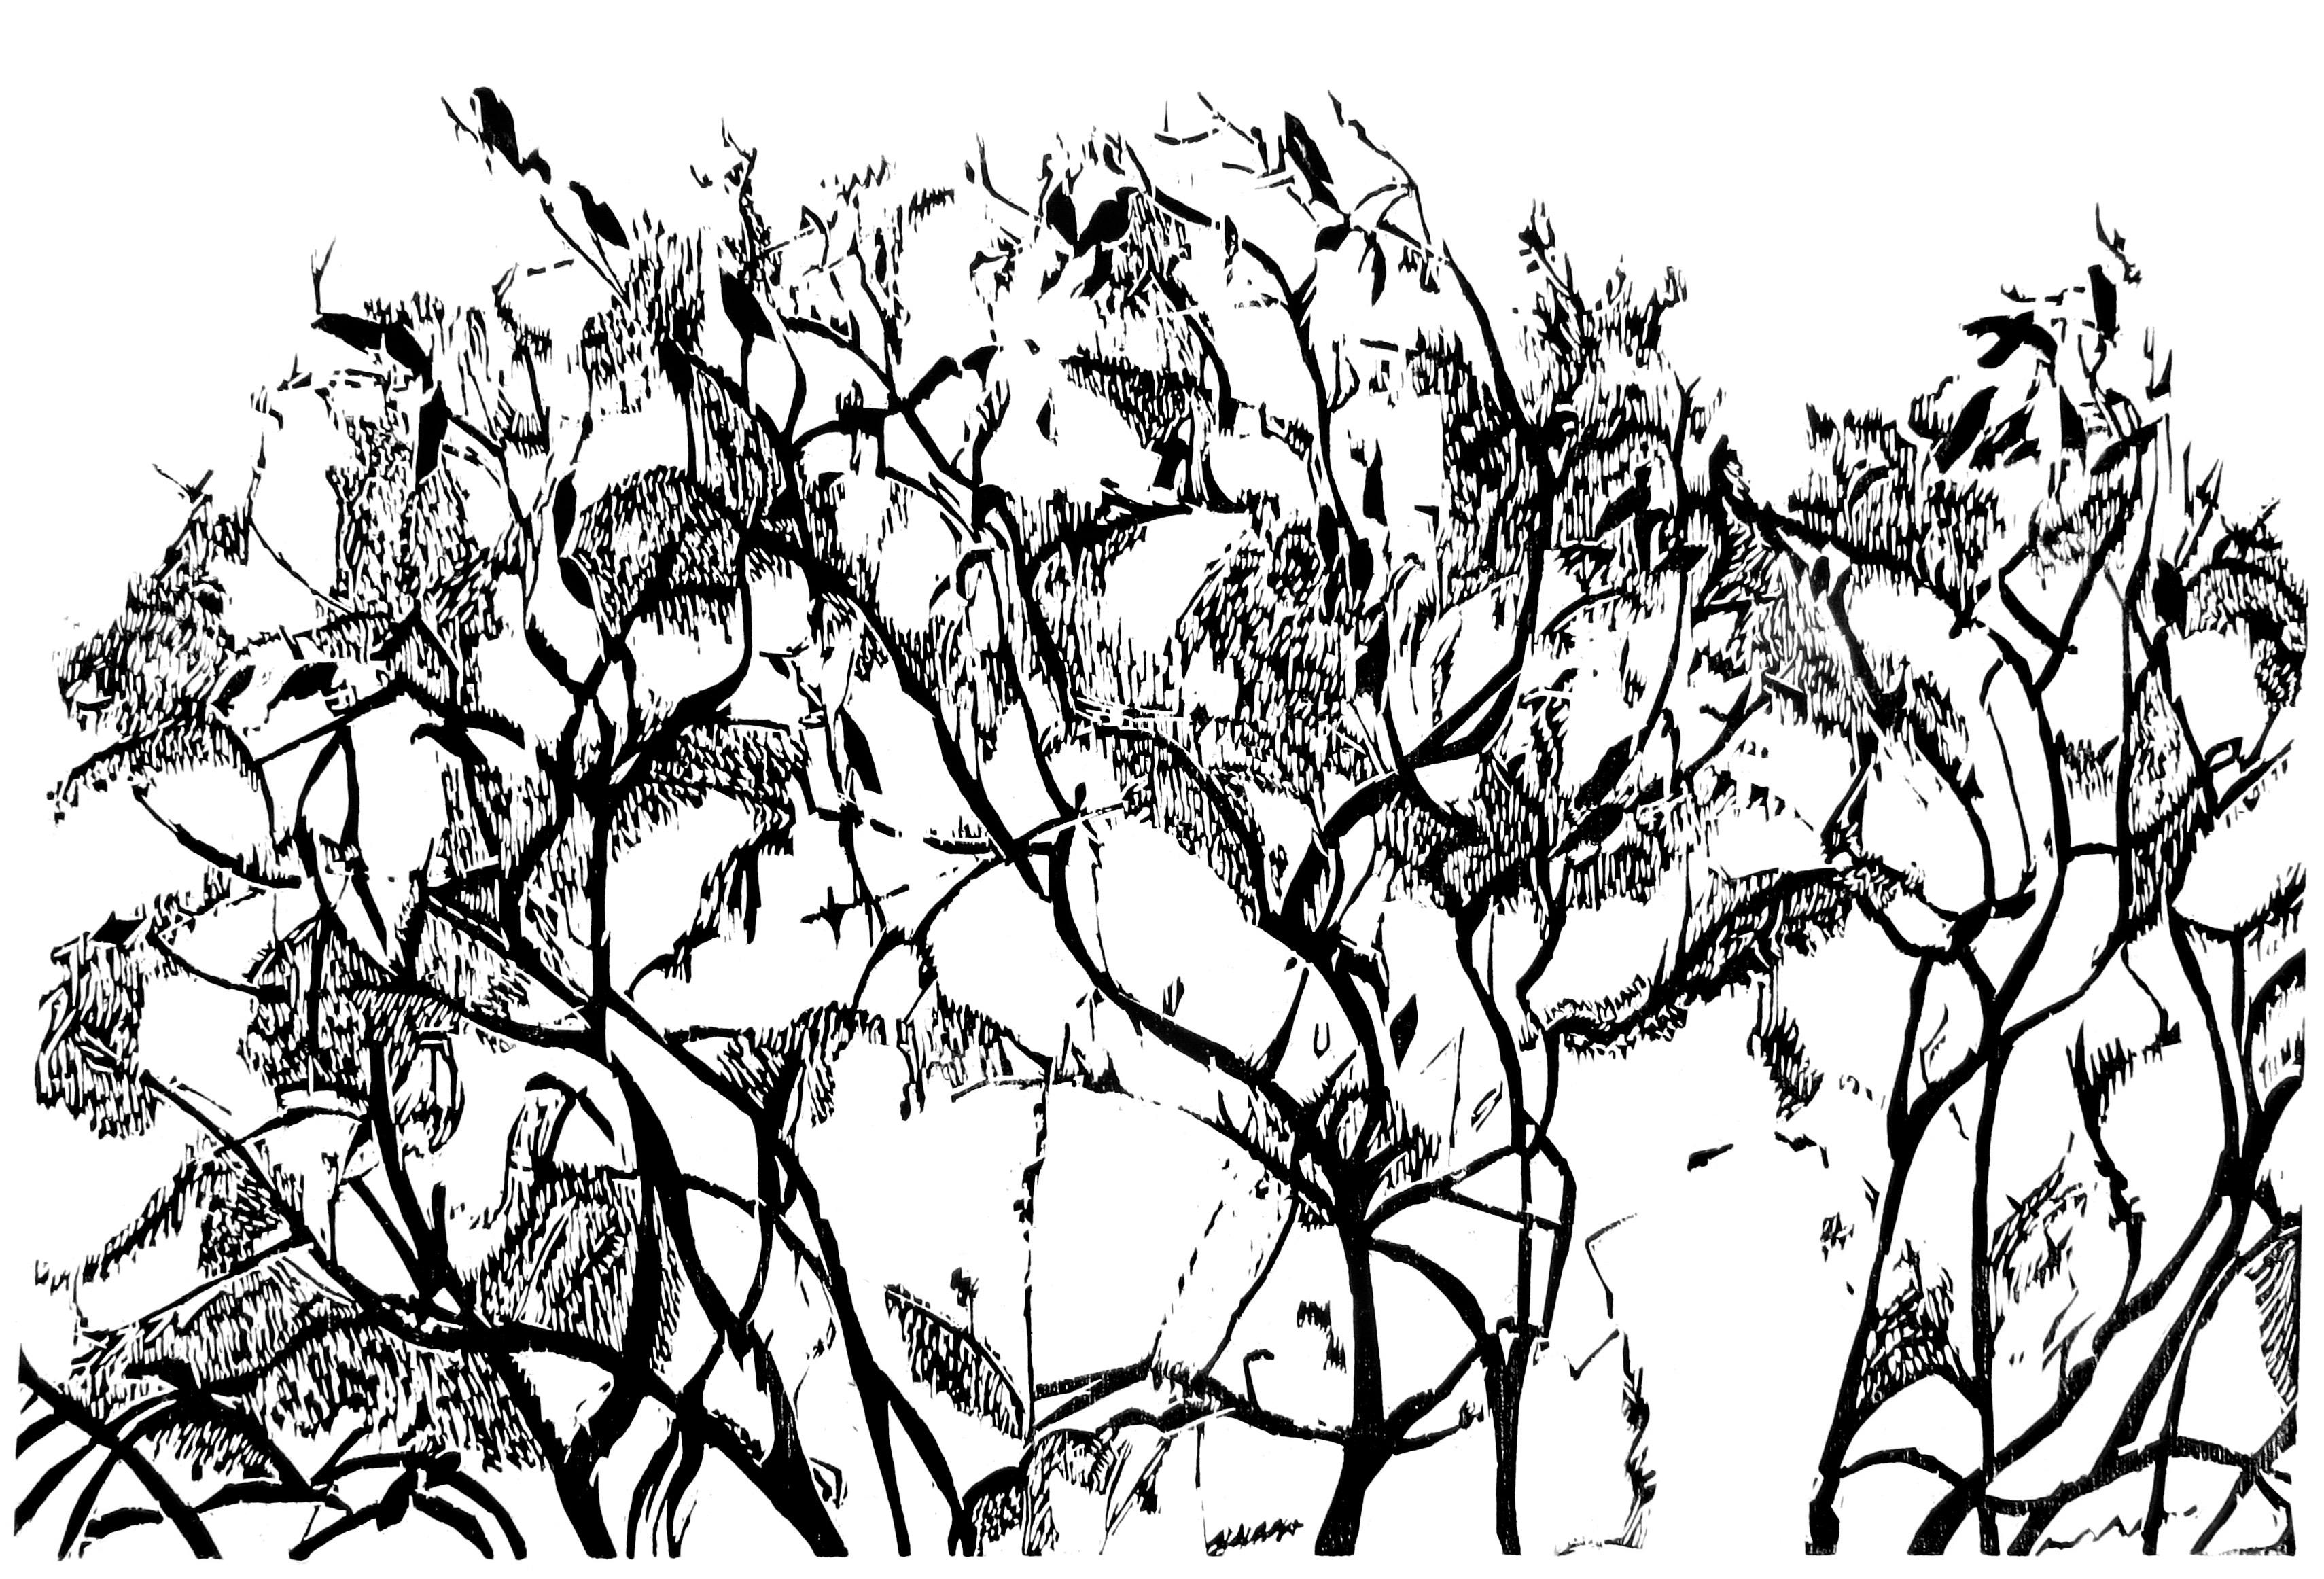 Sasa Markinkov Landscape Print - ‘Black Birds Gathering’   